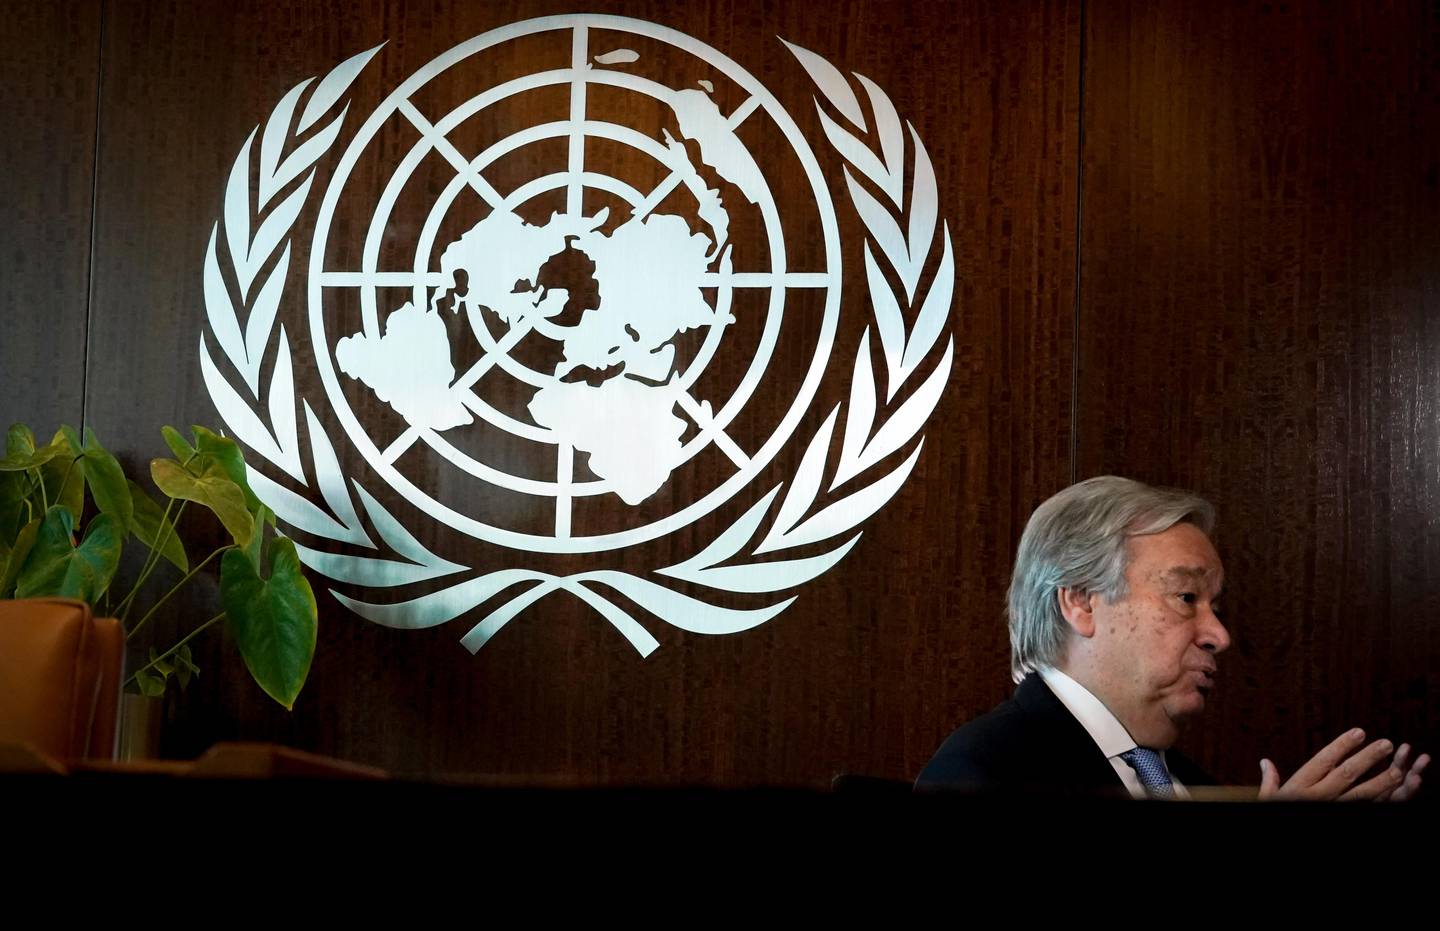 United Nations Secretary-General António Guterres speaks during an interview, Wednesday Oct. 21, 2020, at U.N. headquarters. (AP Photo/Bebeto Matthews)